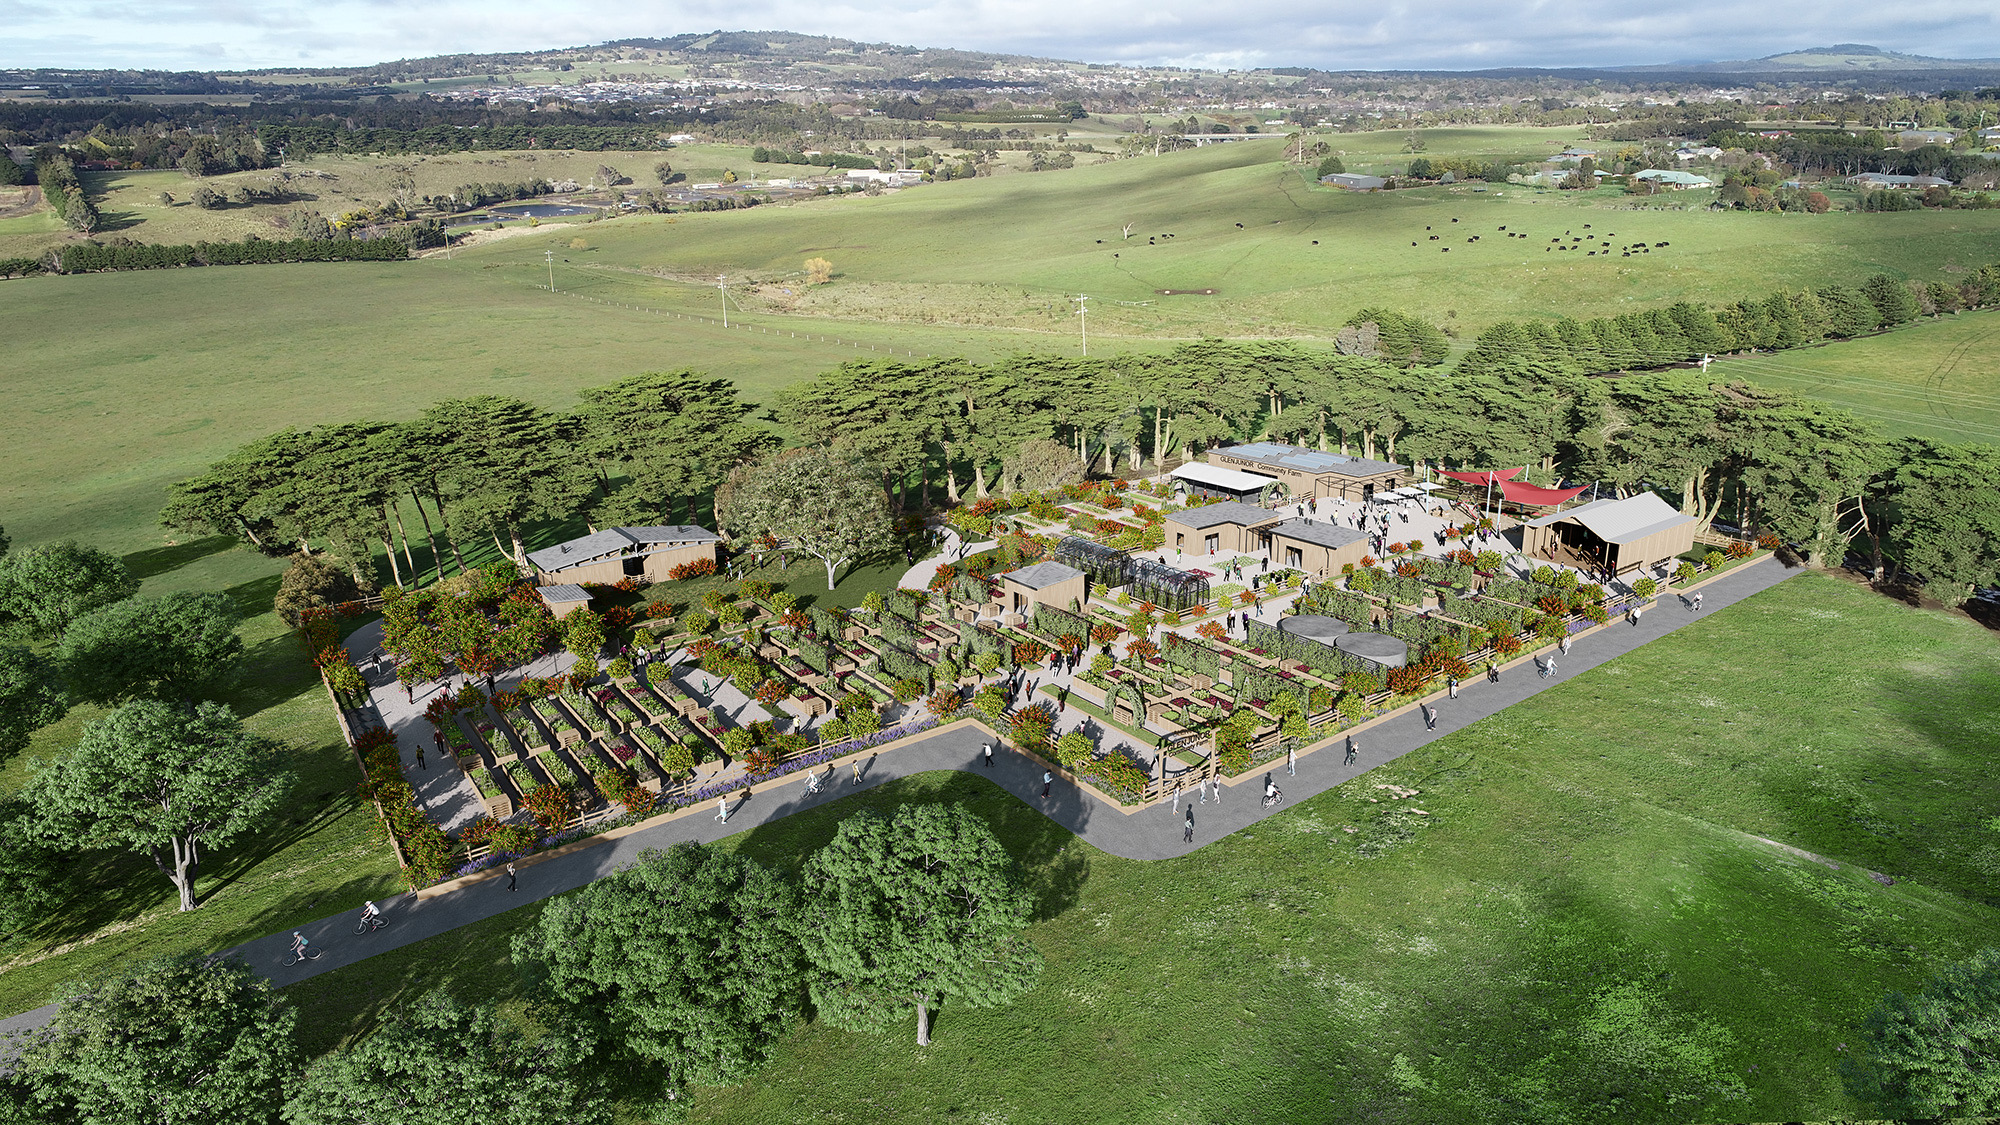 The proposed community food garden at Glen Junor